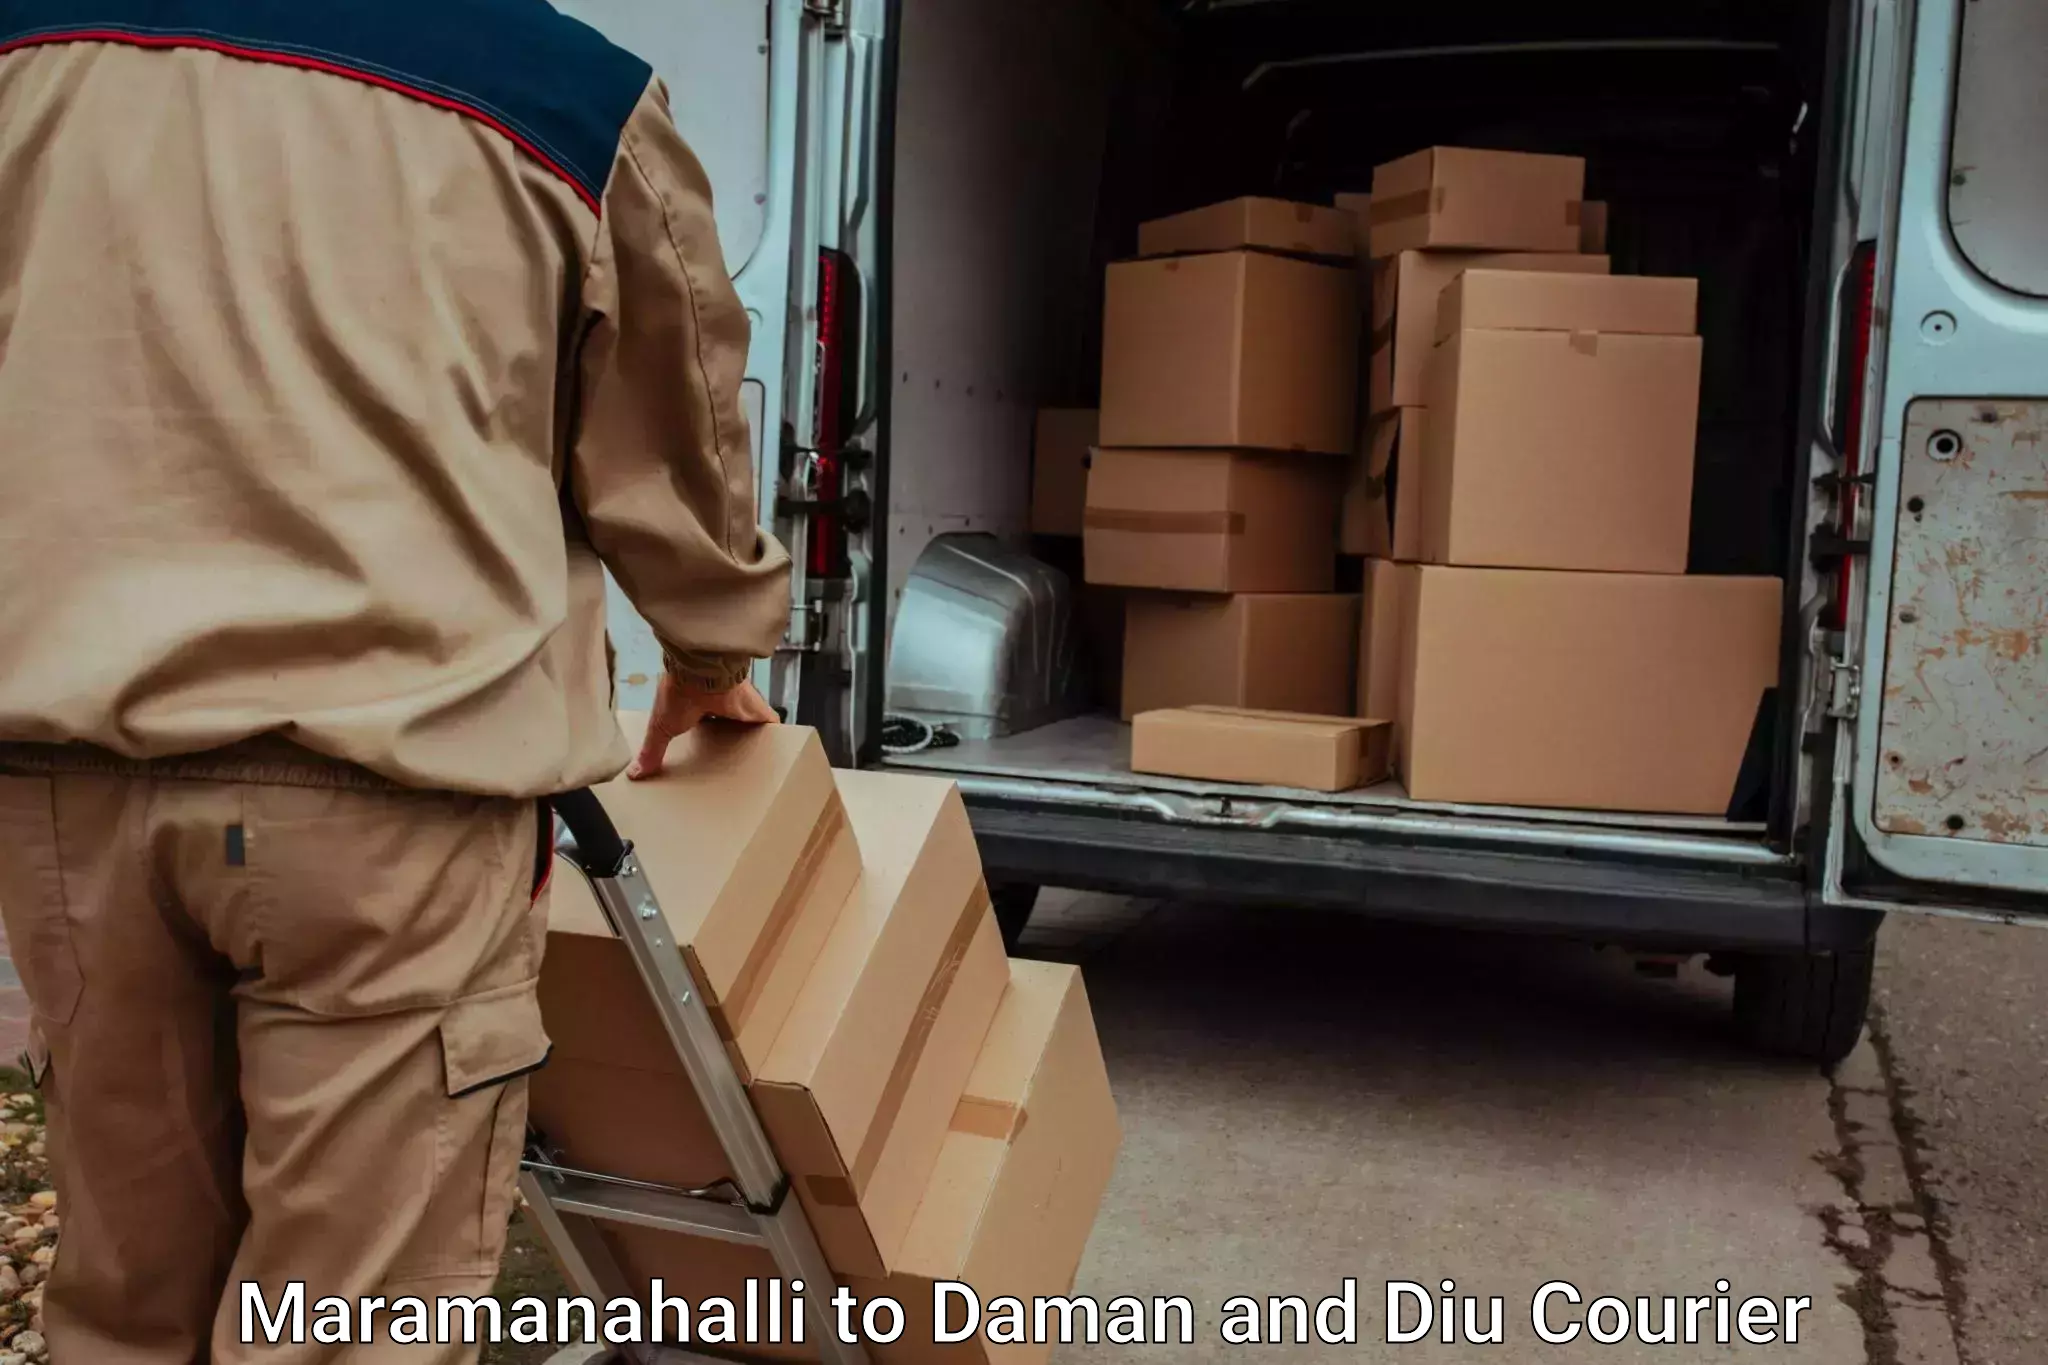 Luggage delivery app Maramanahalli to Diu